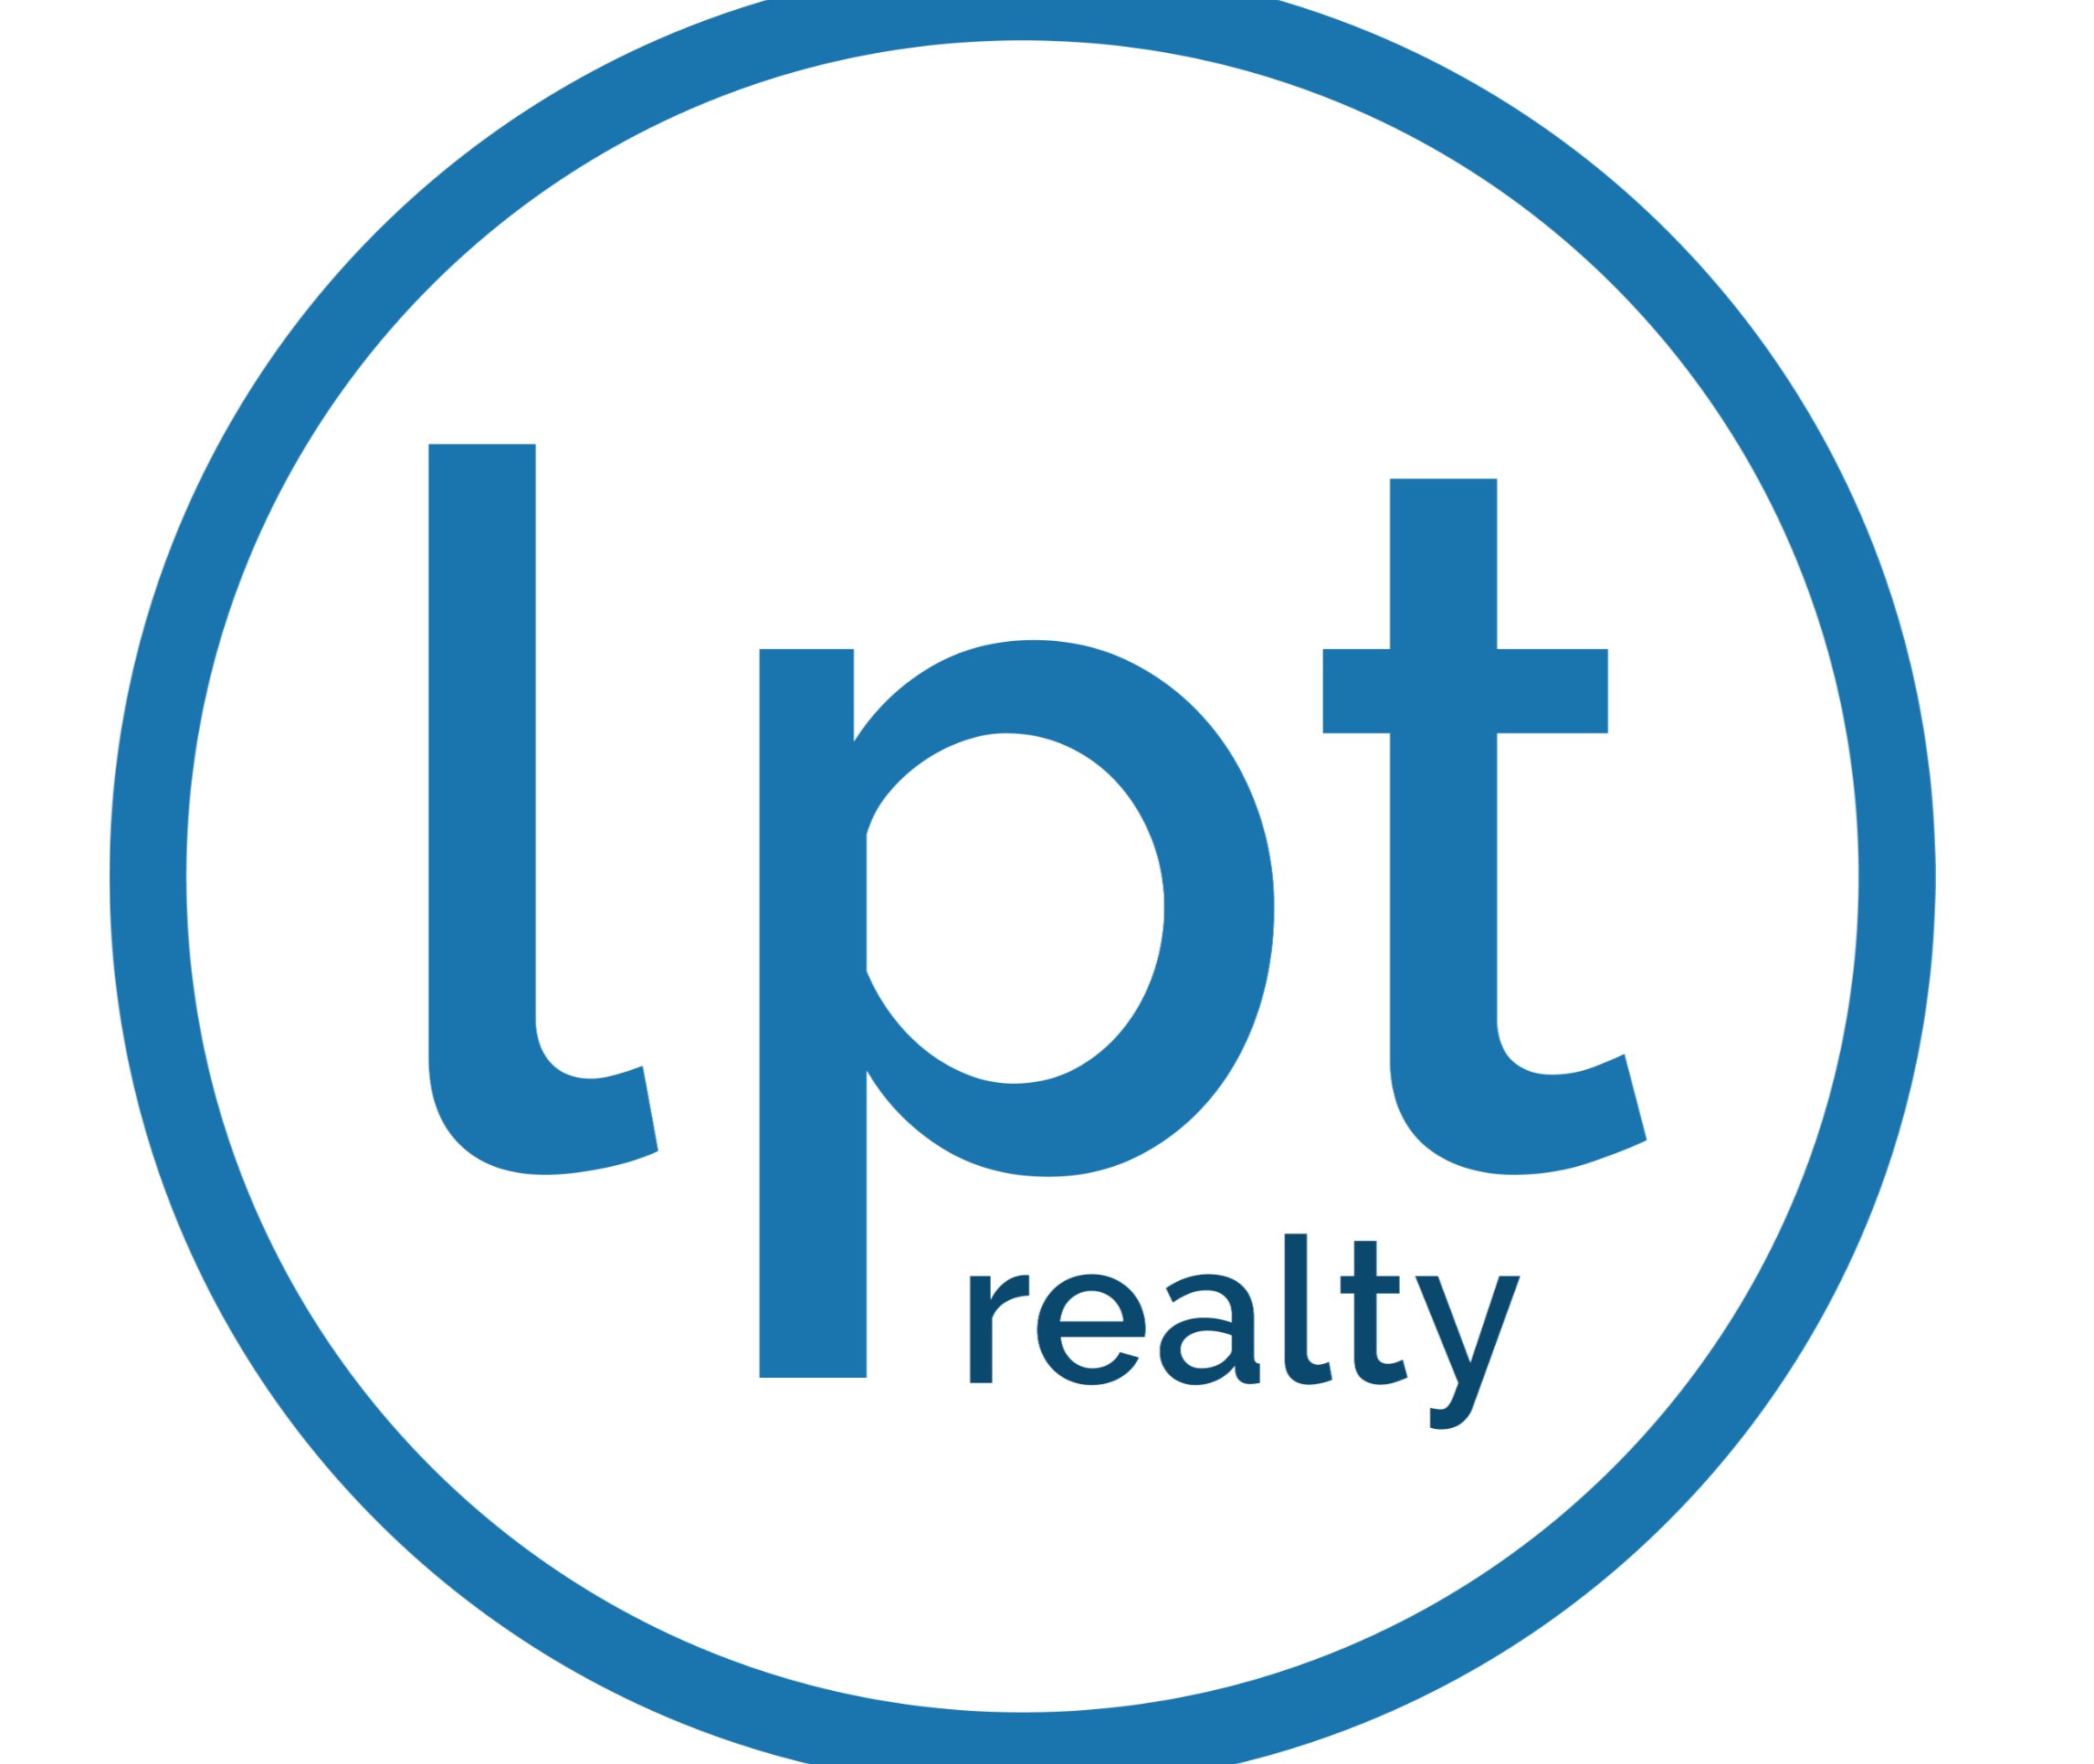 LPT REALTY LLC